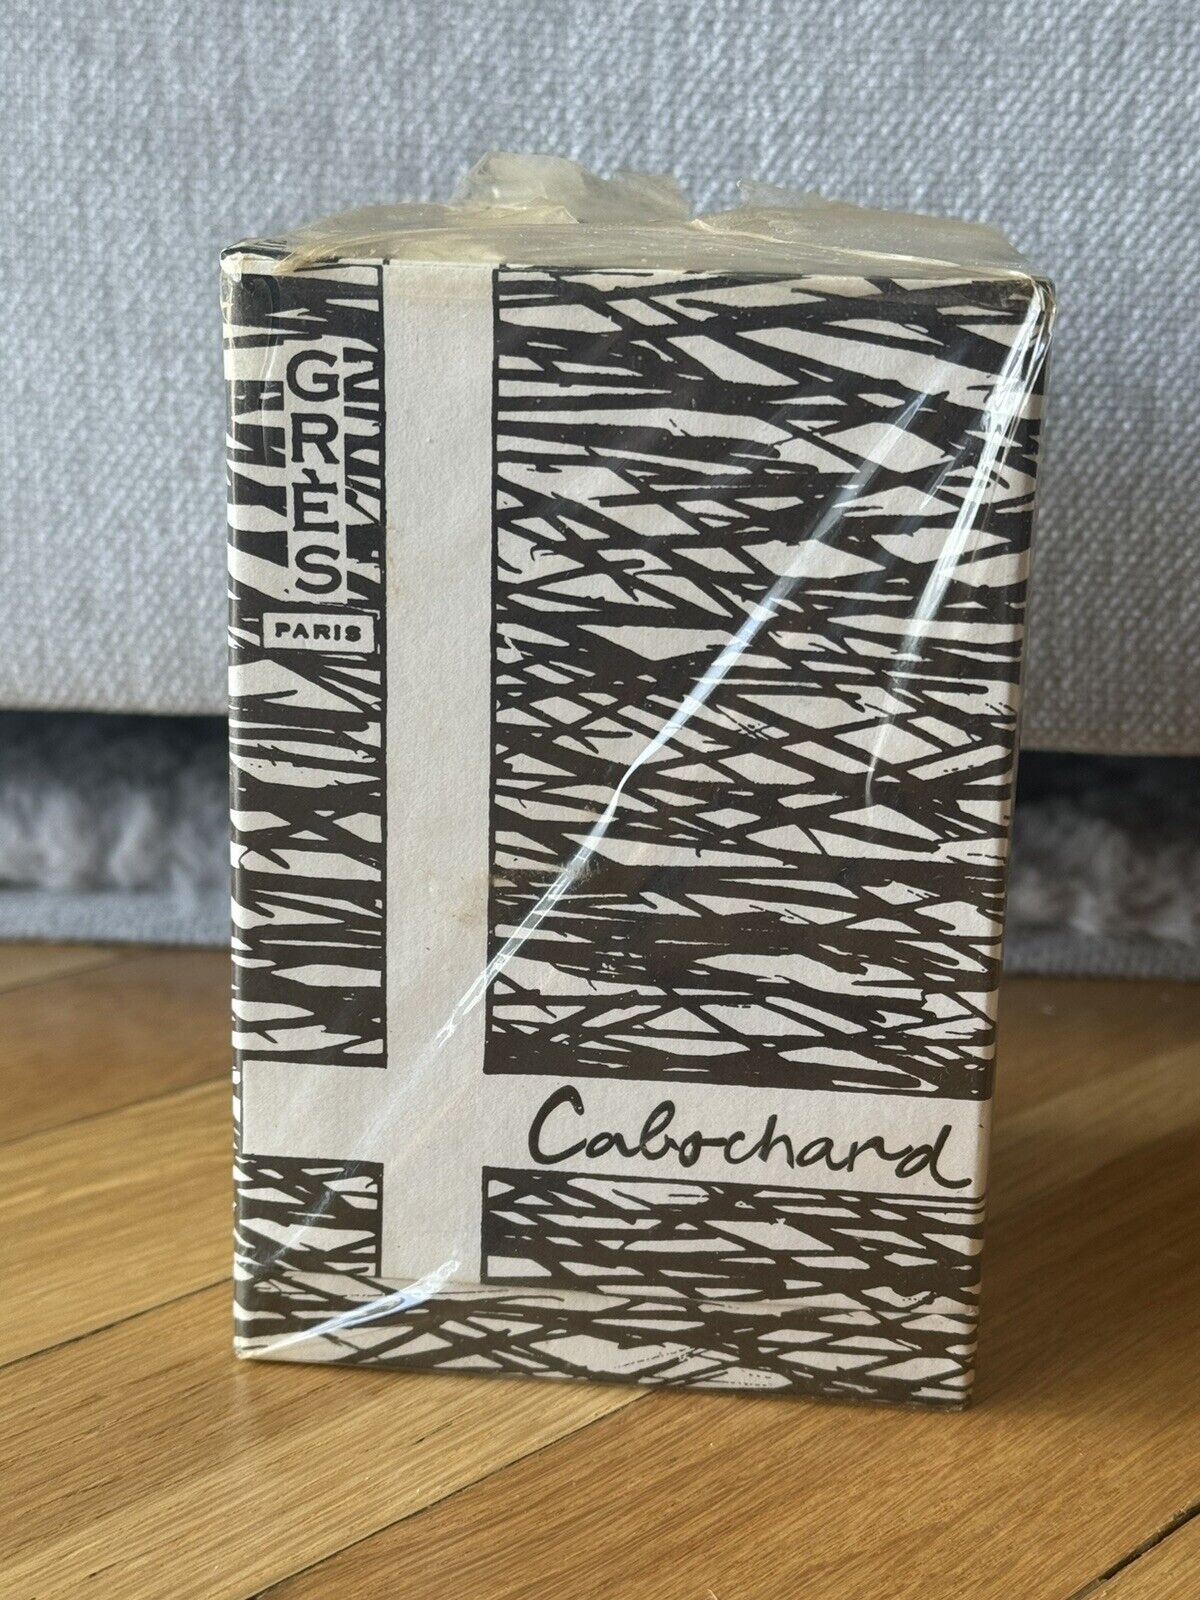 Cabochard Gres pure parfum 60 ml (2 oz)Vintage 1959~Sealed Package~Unopened~RARE